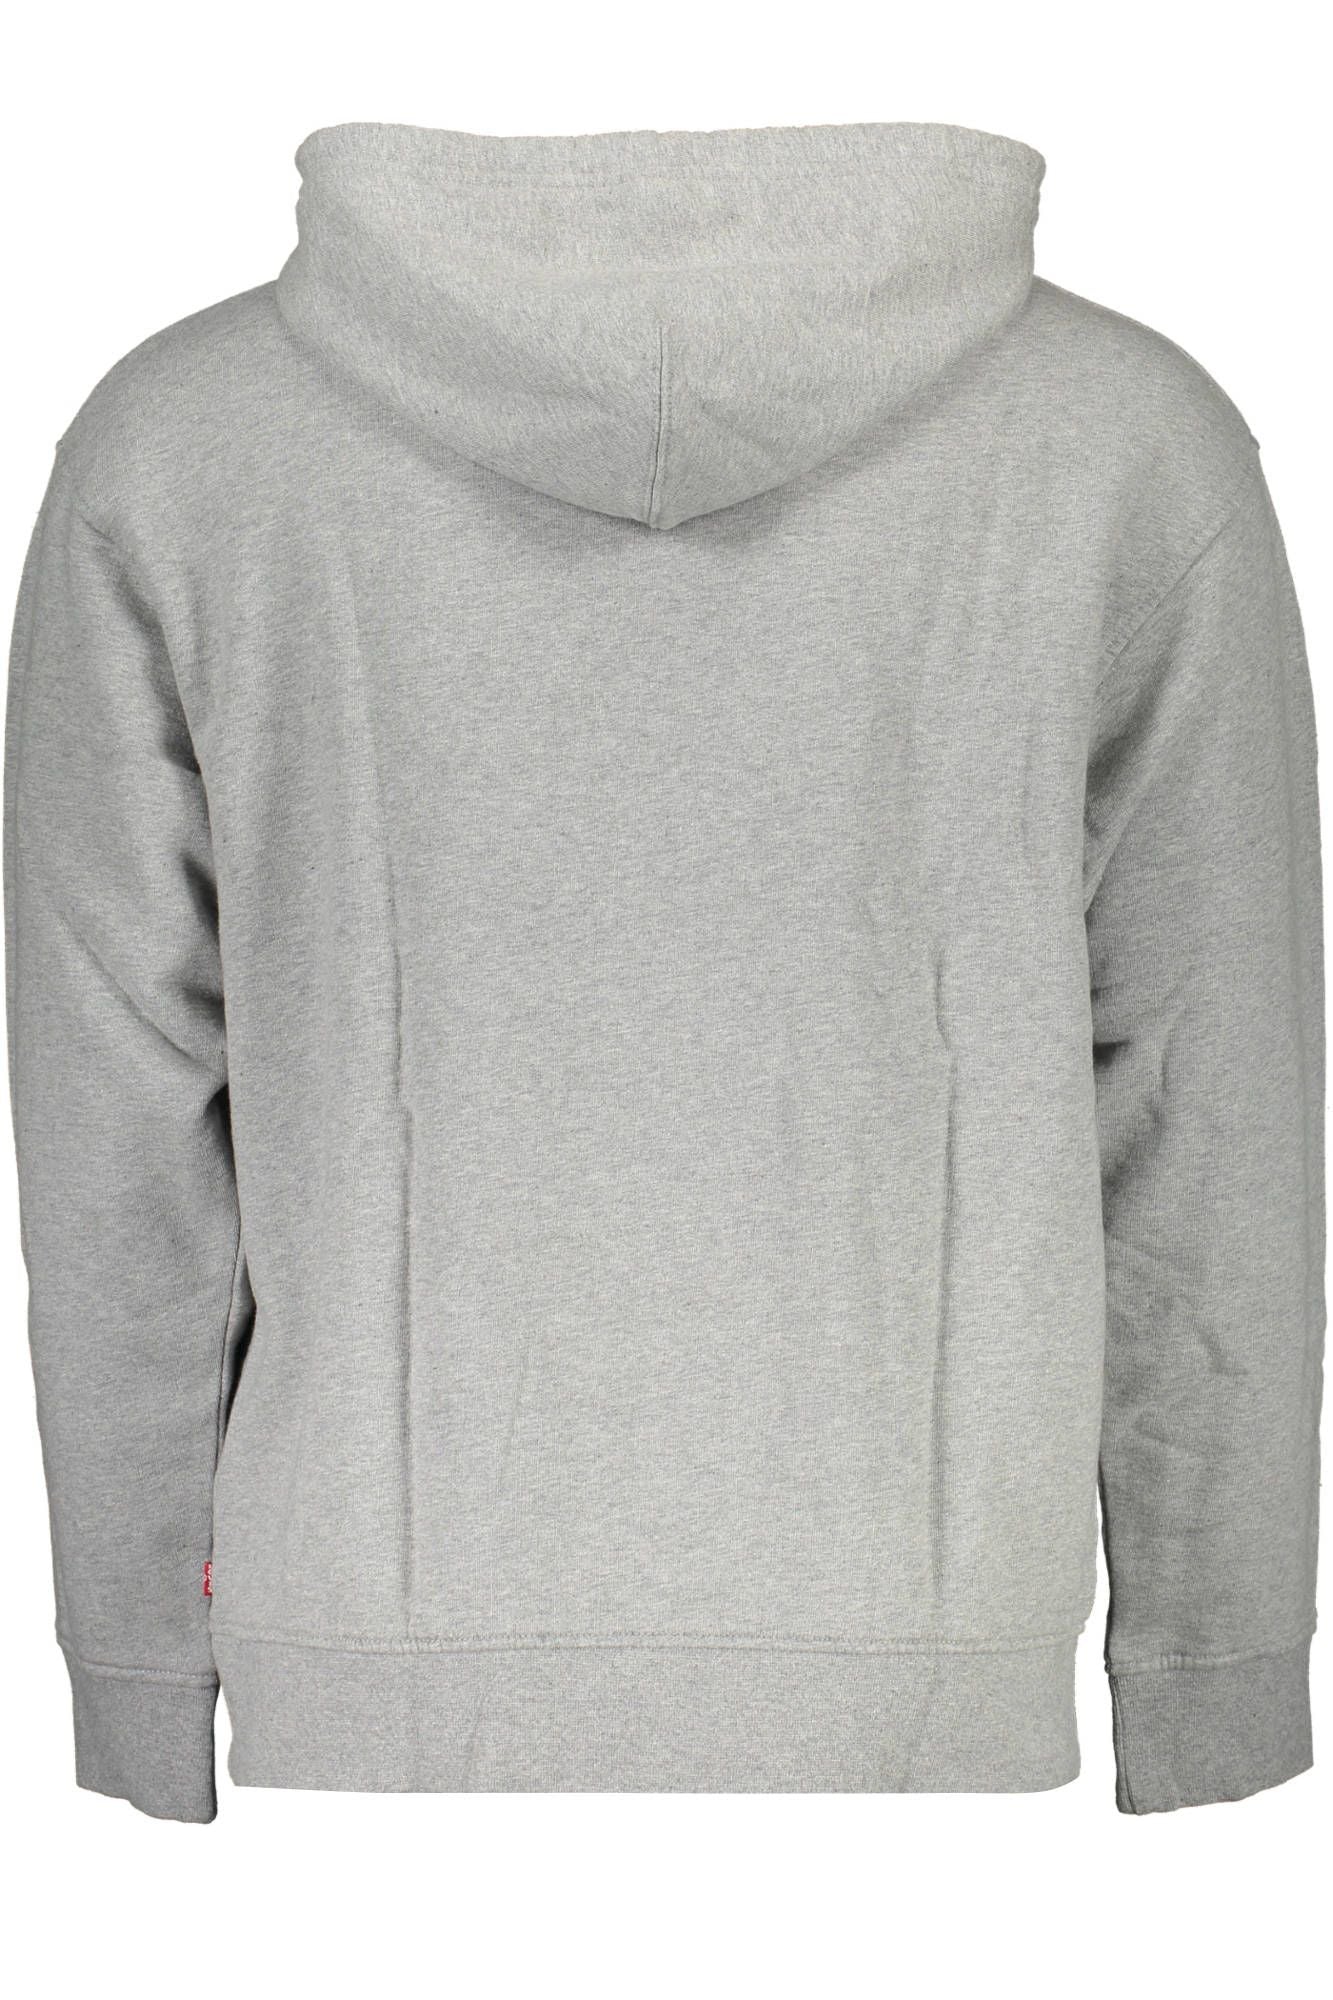 Classic Gray Hooded Sweatshirt - Divitiae Glamour